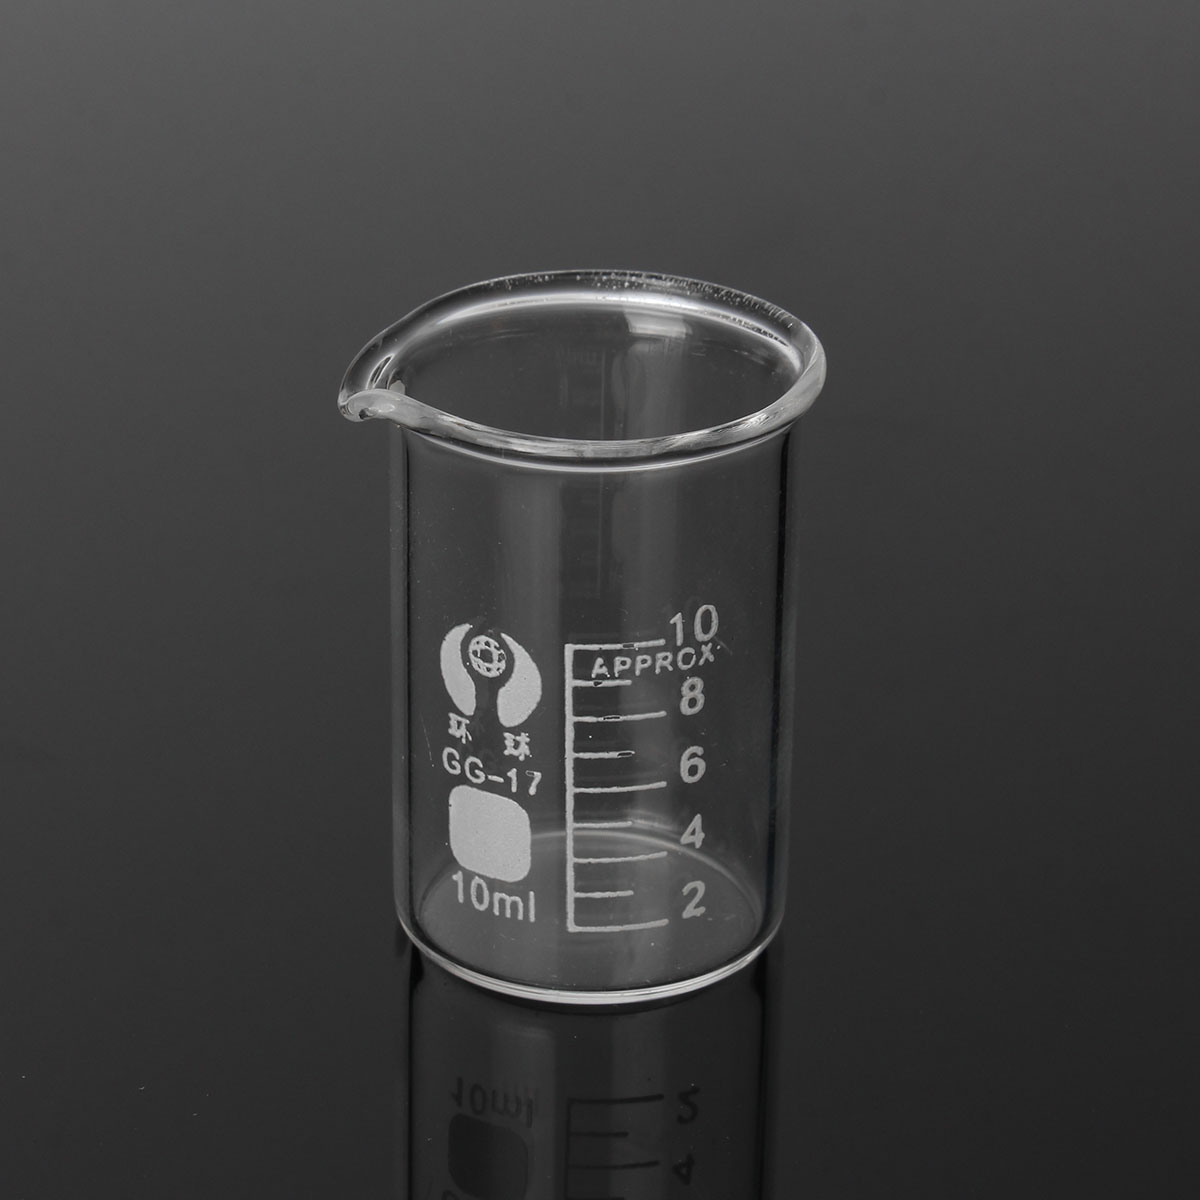 5Pcs 5ml 10ml 25ml 50ml 100ml Beaker Set Graduated Borosilicate Glass Beaker Volumetric Measuring Laboratory Glassware 15